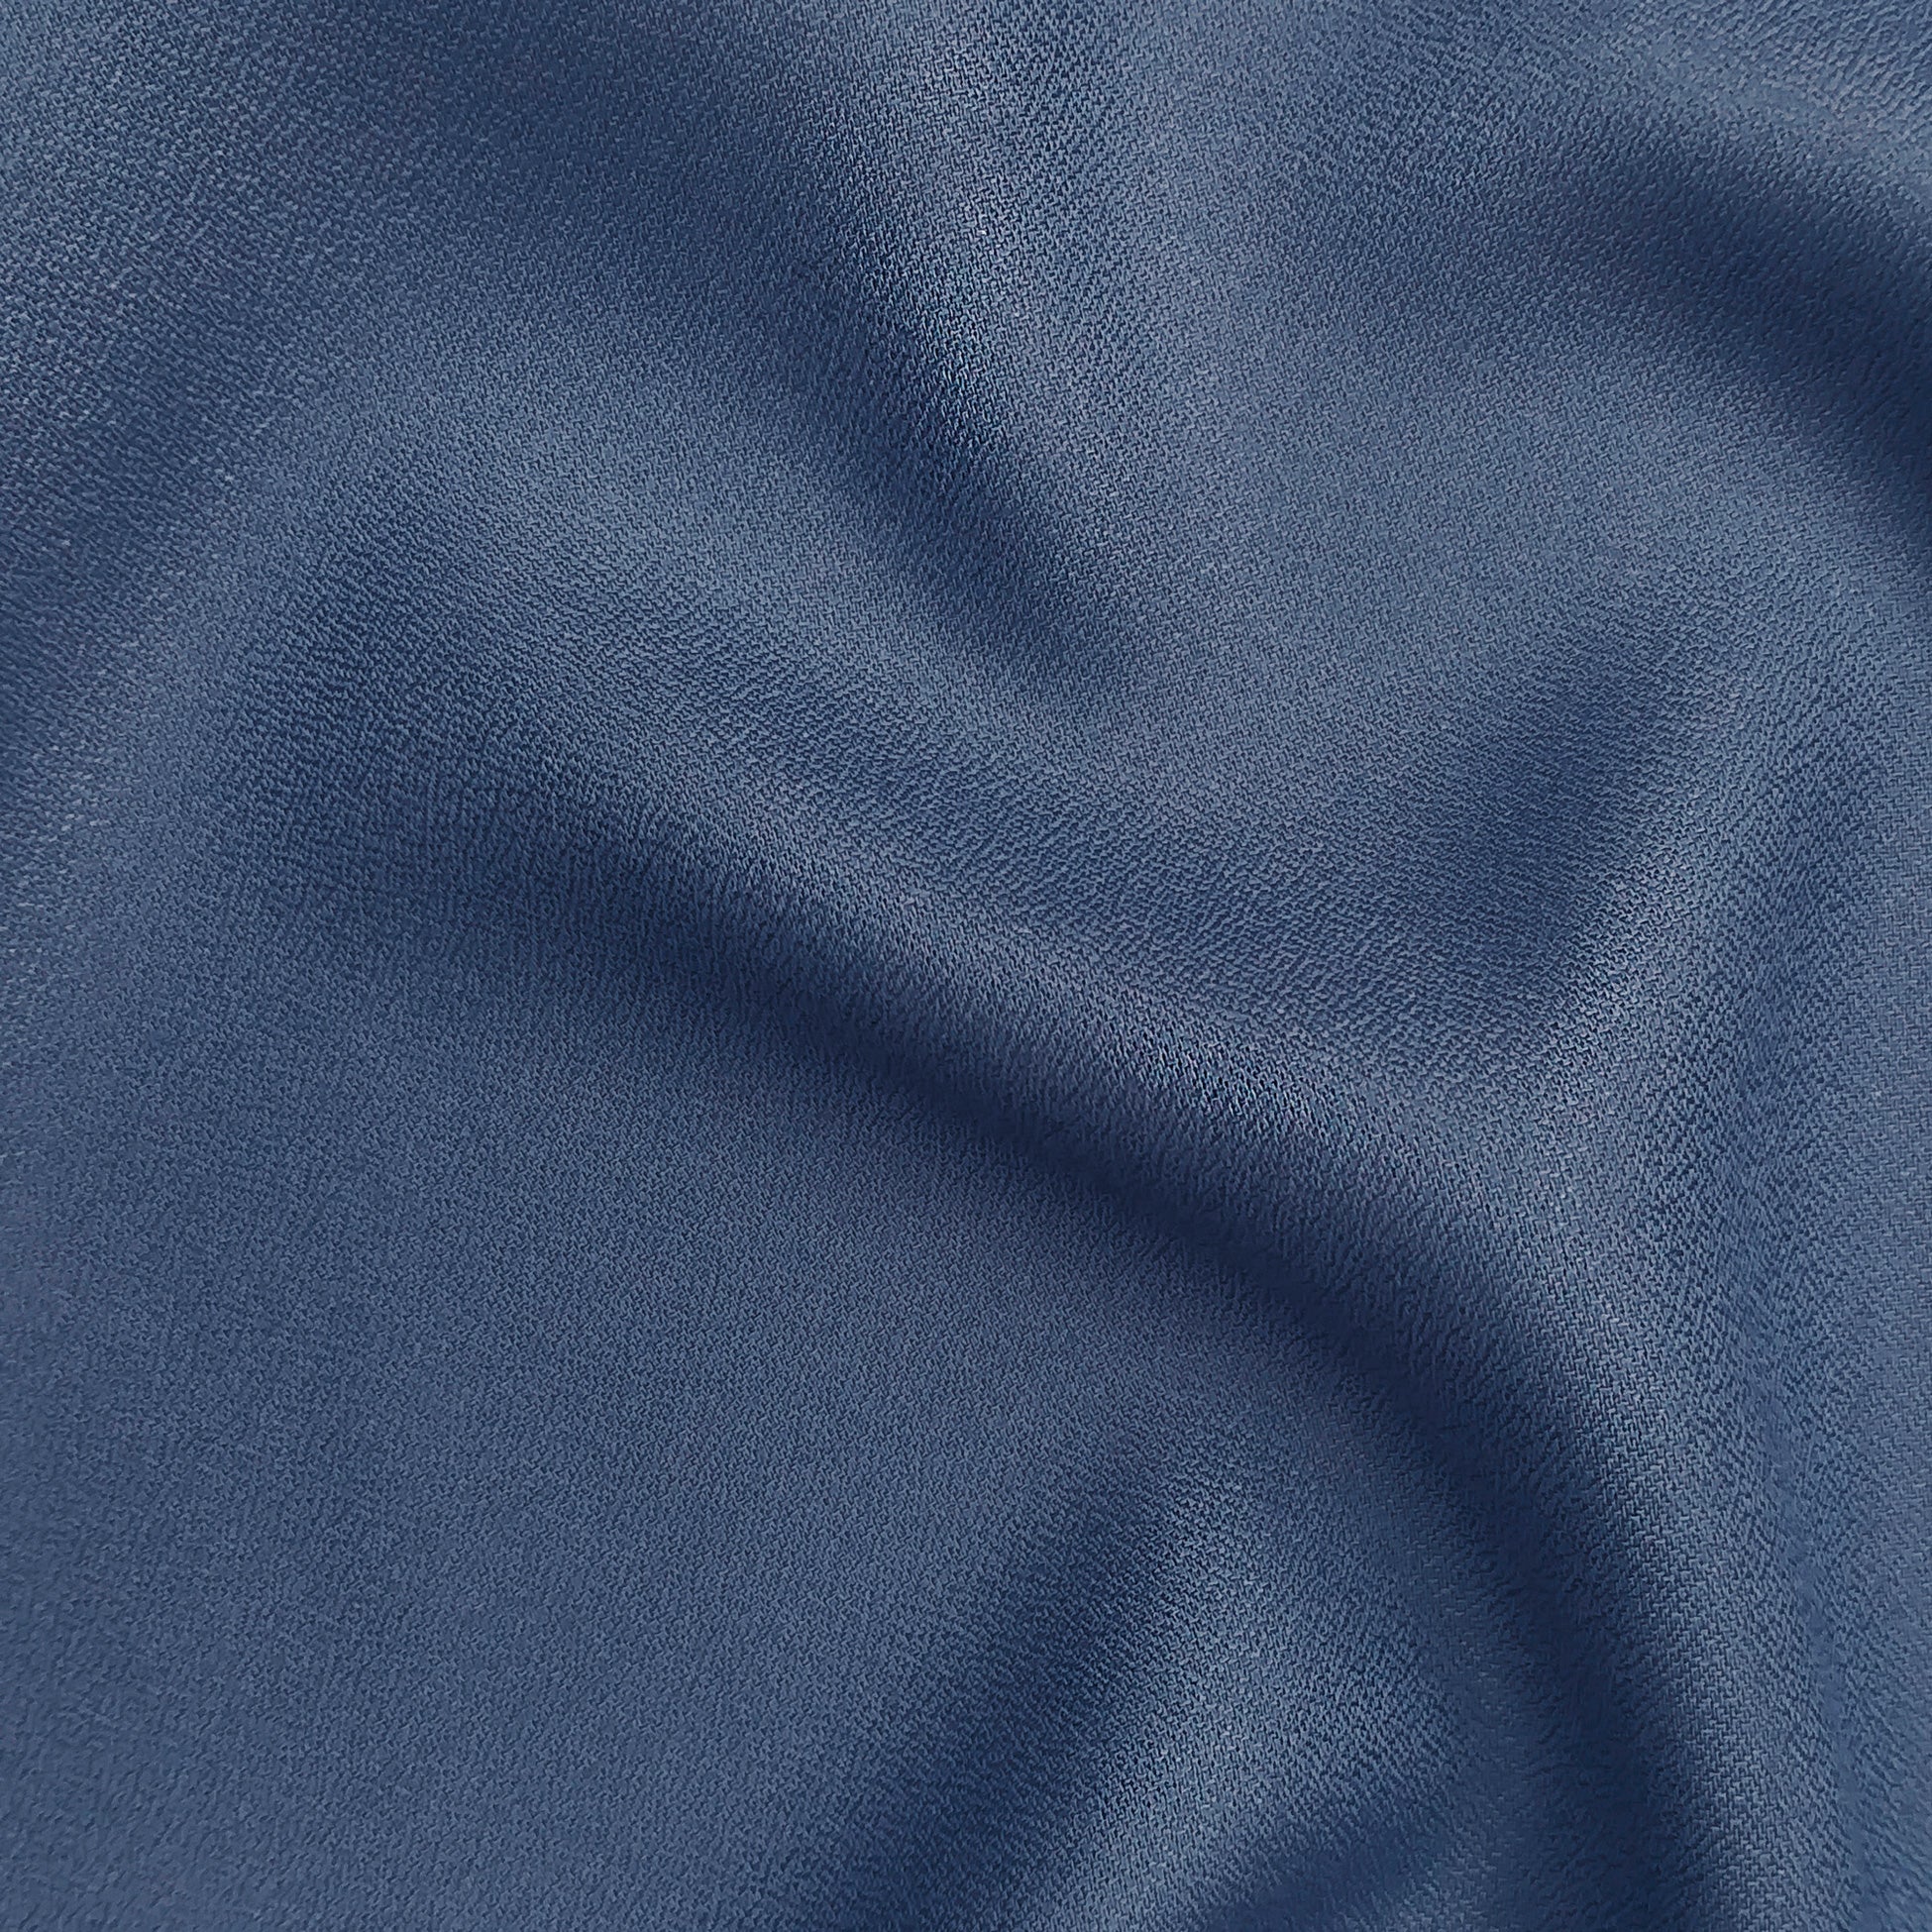 Atelier Brunette - Crepe Viscose Cobalt Dress Fabric (Pre Order)